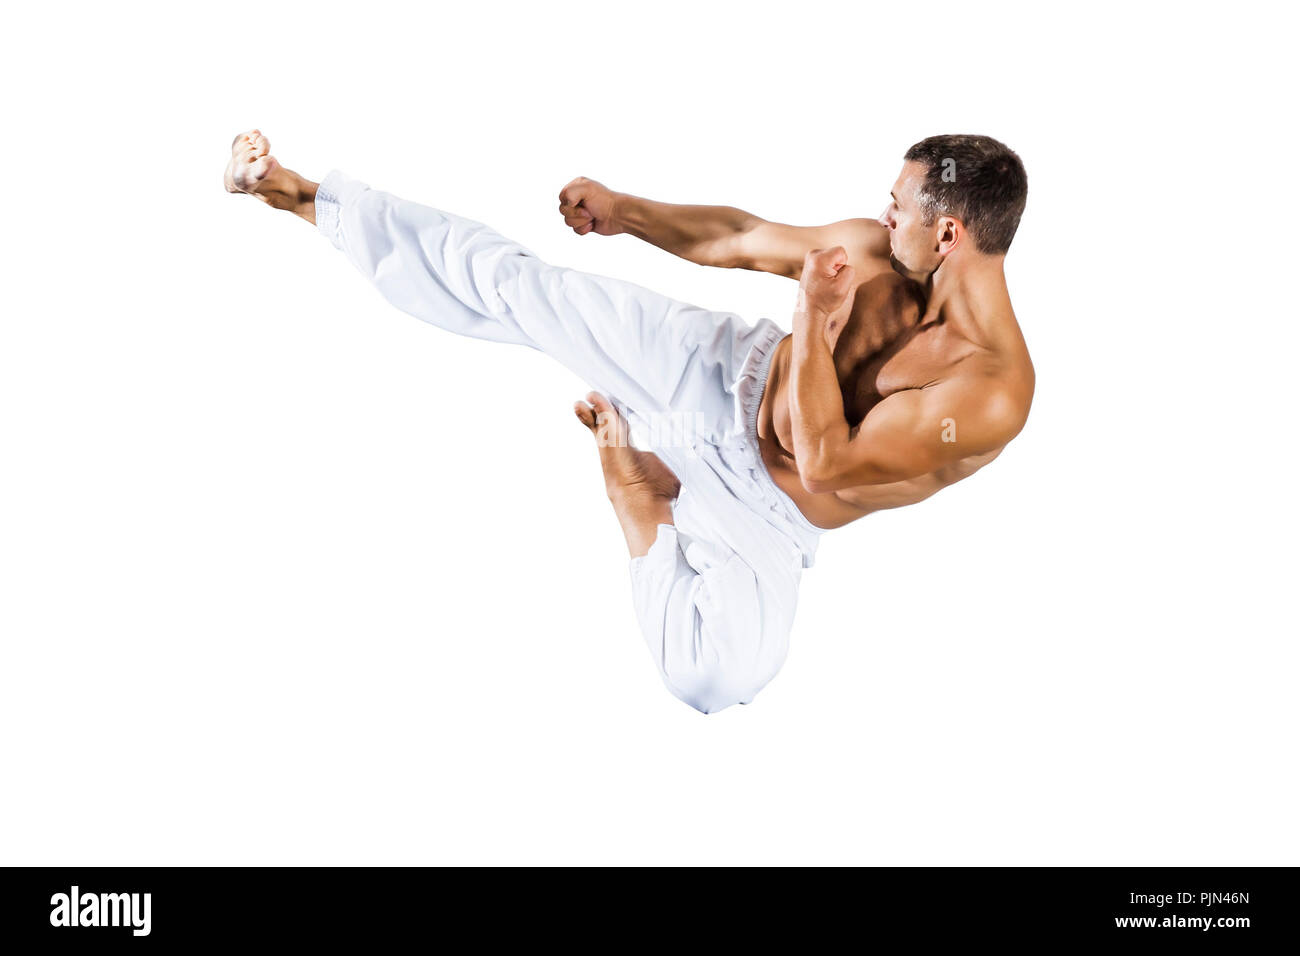 Un maître de taekwondo dans le saut avant fond blanc, Ein im Taekwondo-Meister vor weissem Hintergrund Sprung Banque D'Images